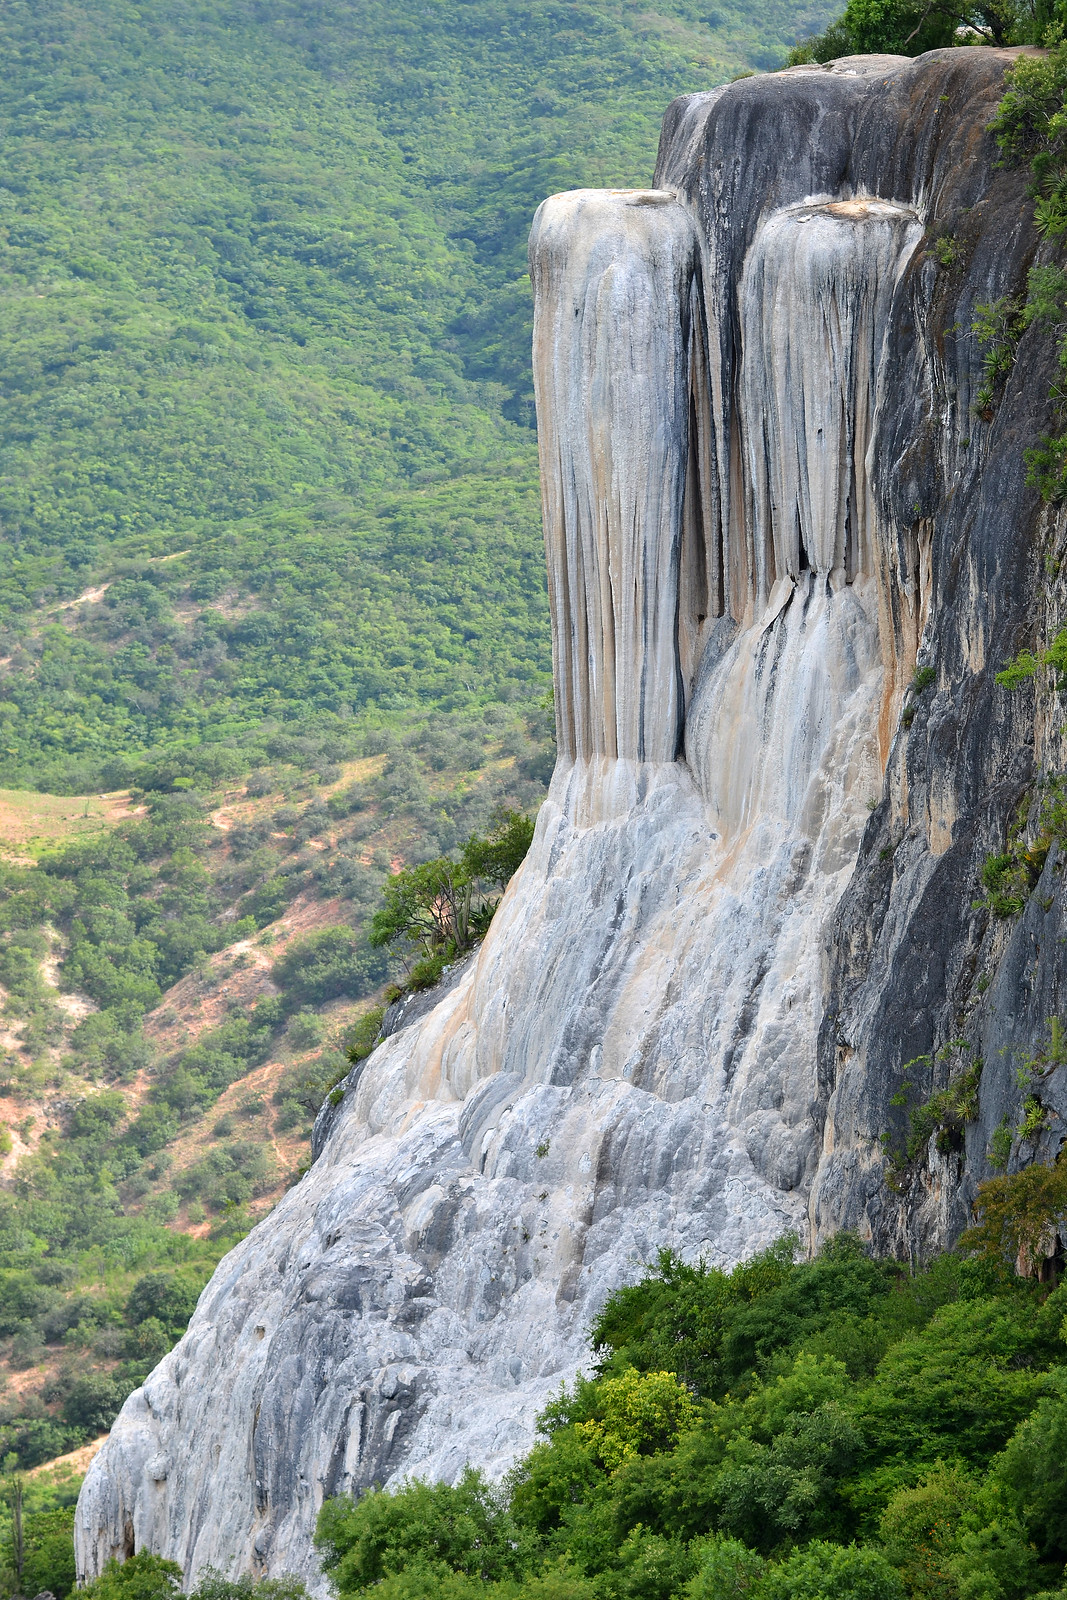 Cascadas petrificadas - petrified falls, Hierve el Agua, Oaxaca